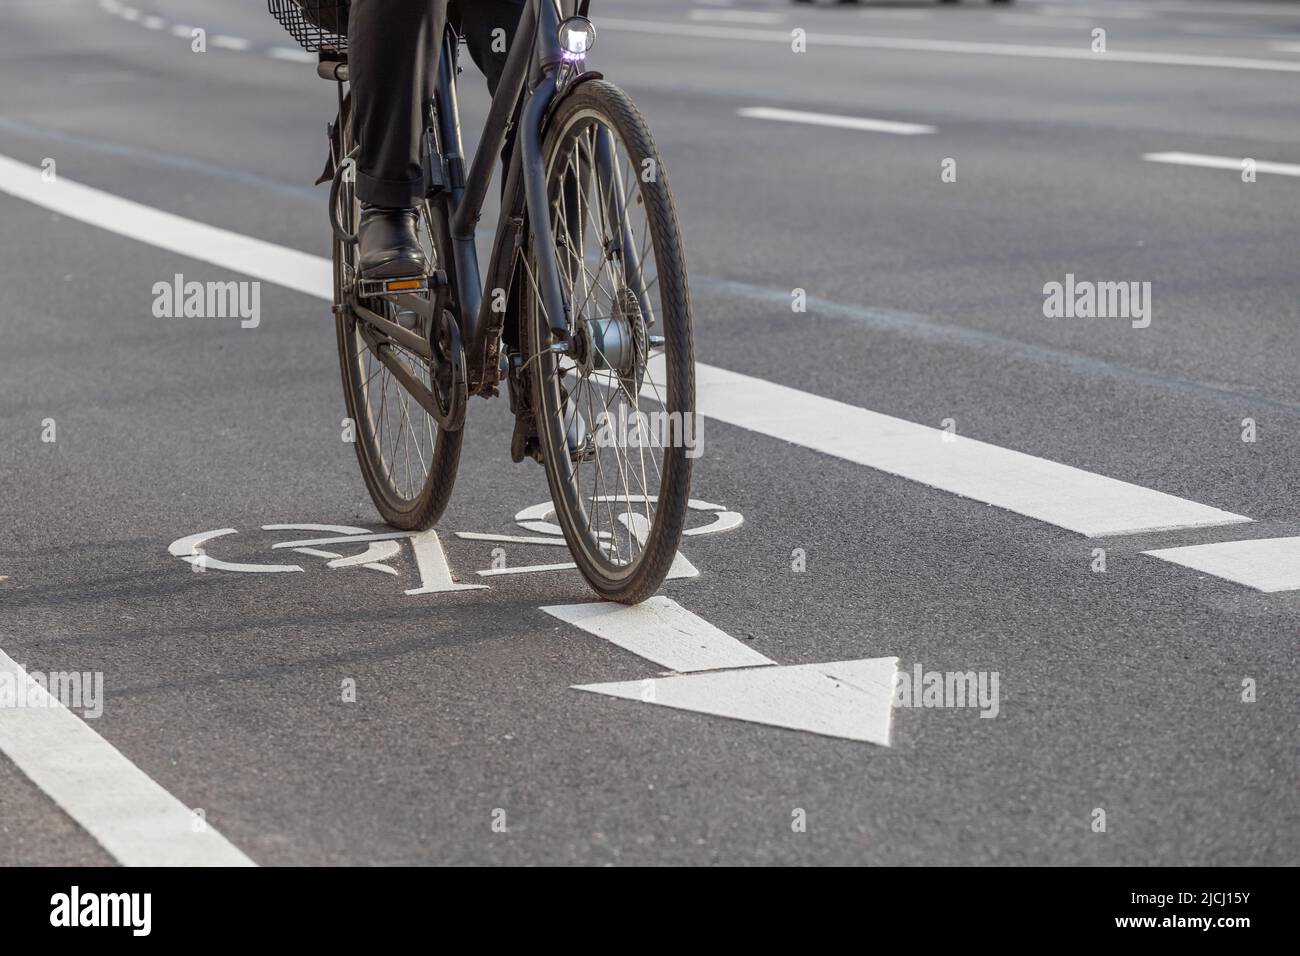 cyclist rides on bike lane via bicycle pictogram Stock Photo